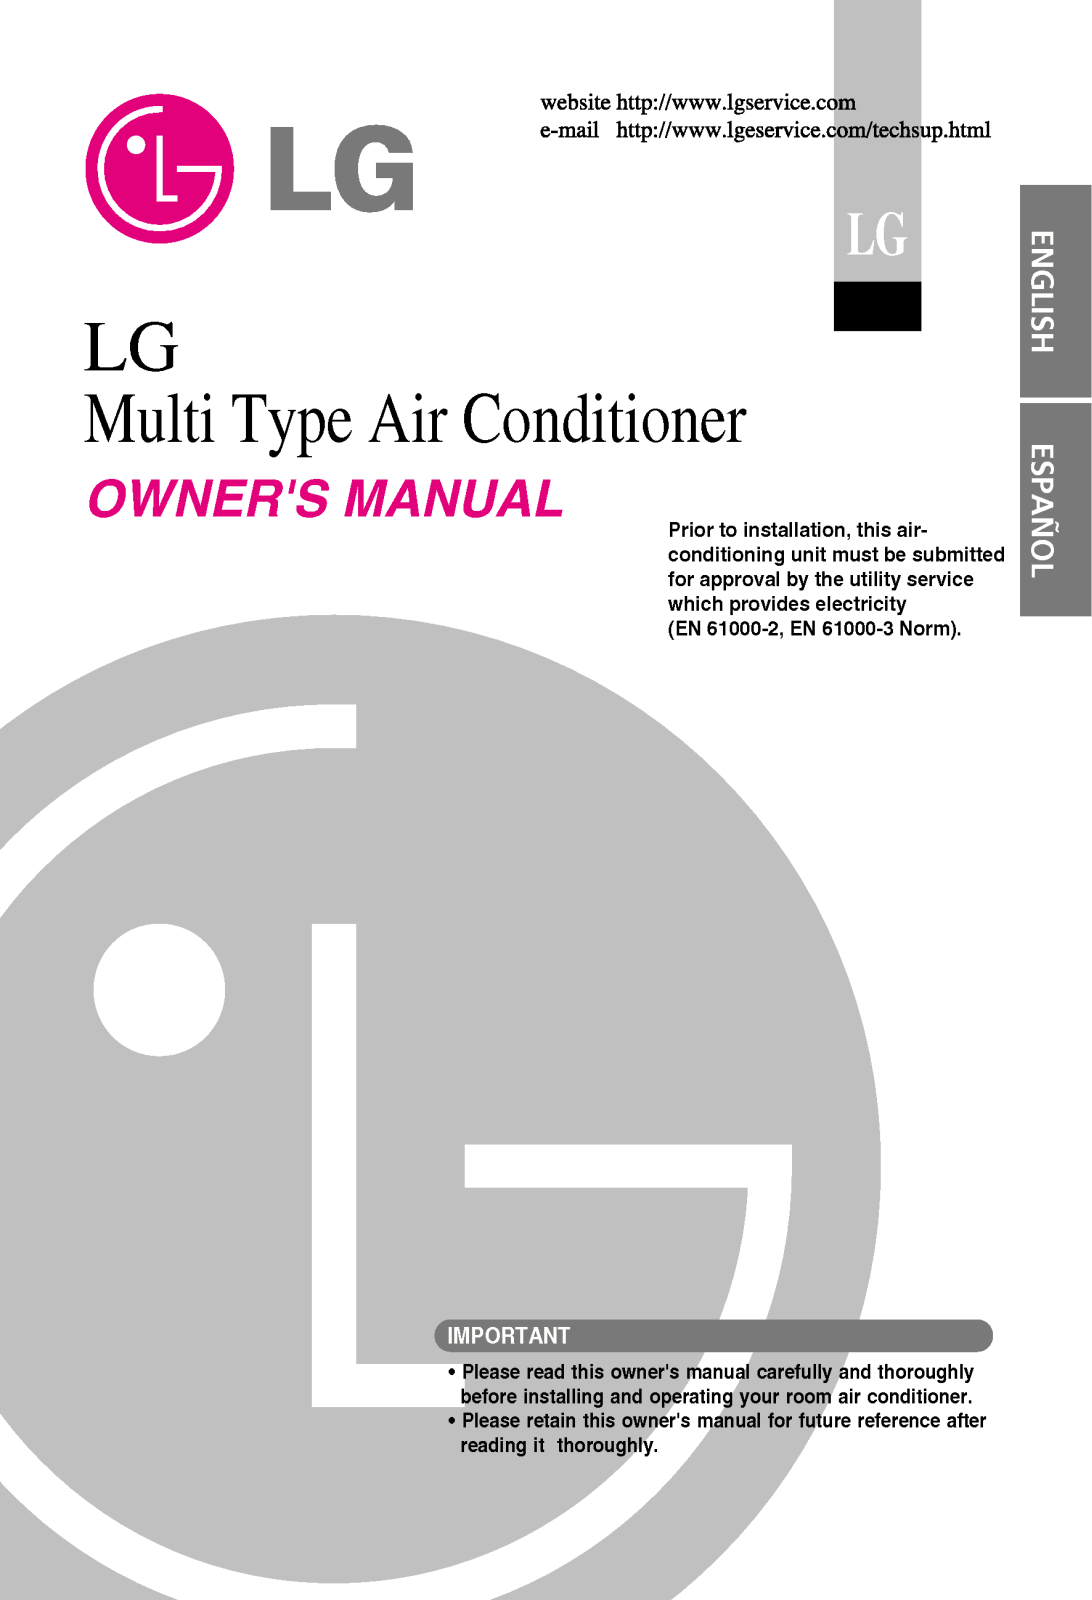 LG MTP 4006 User Manual